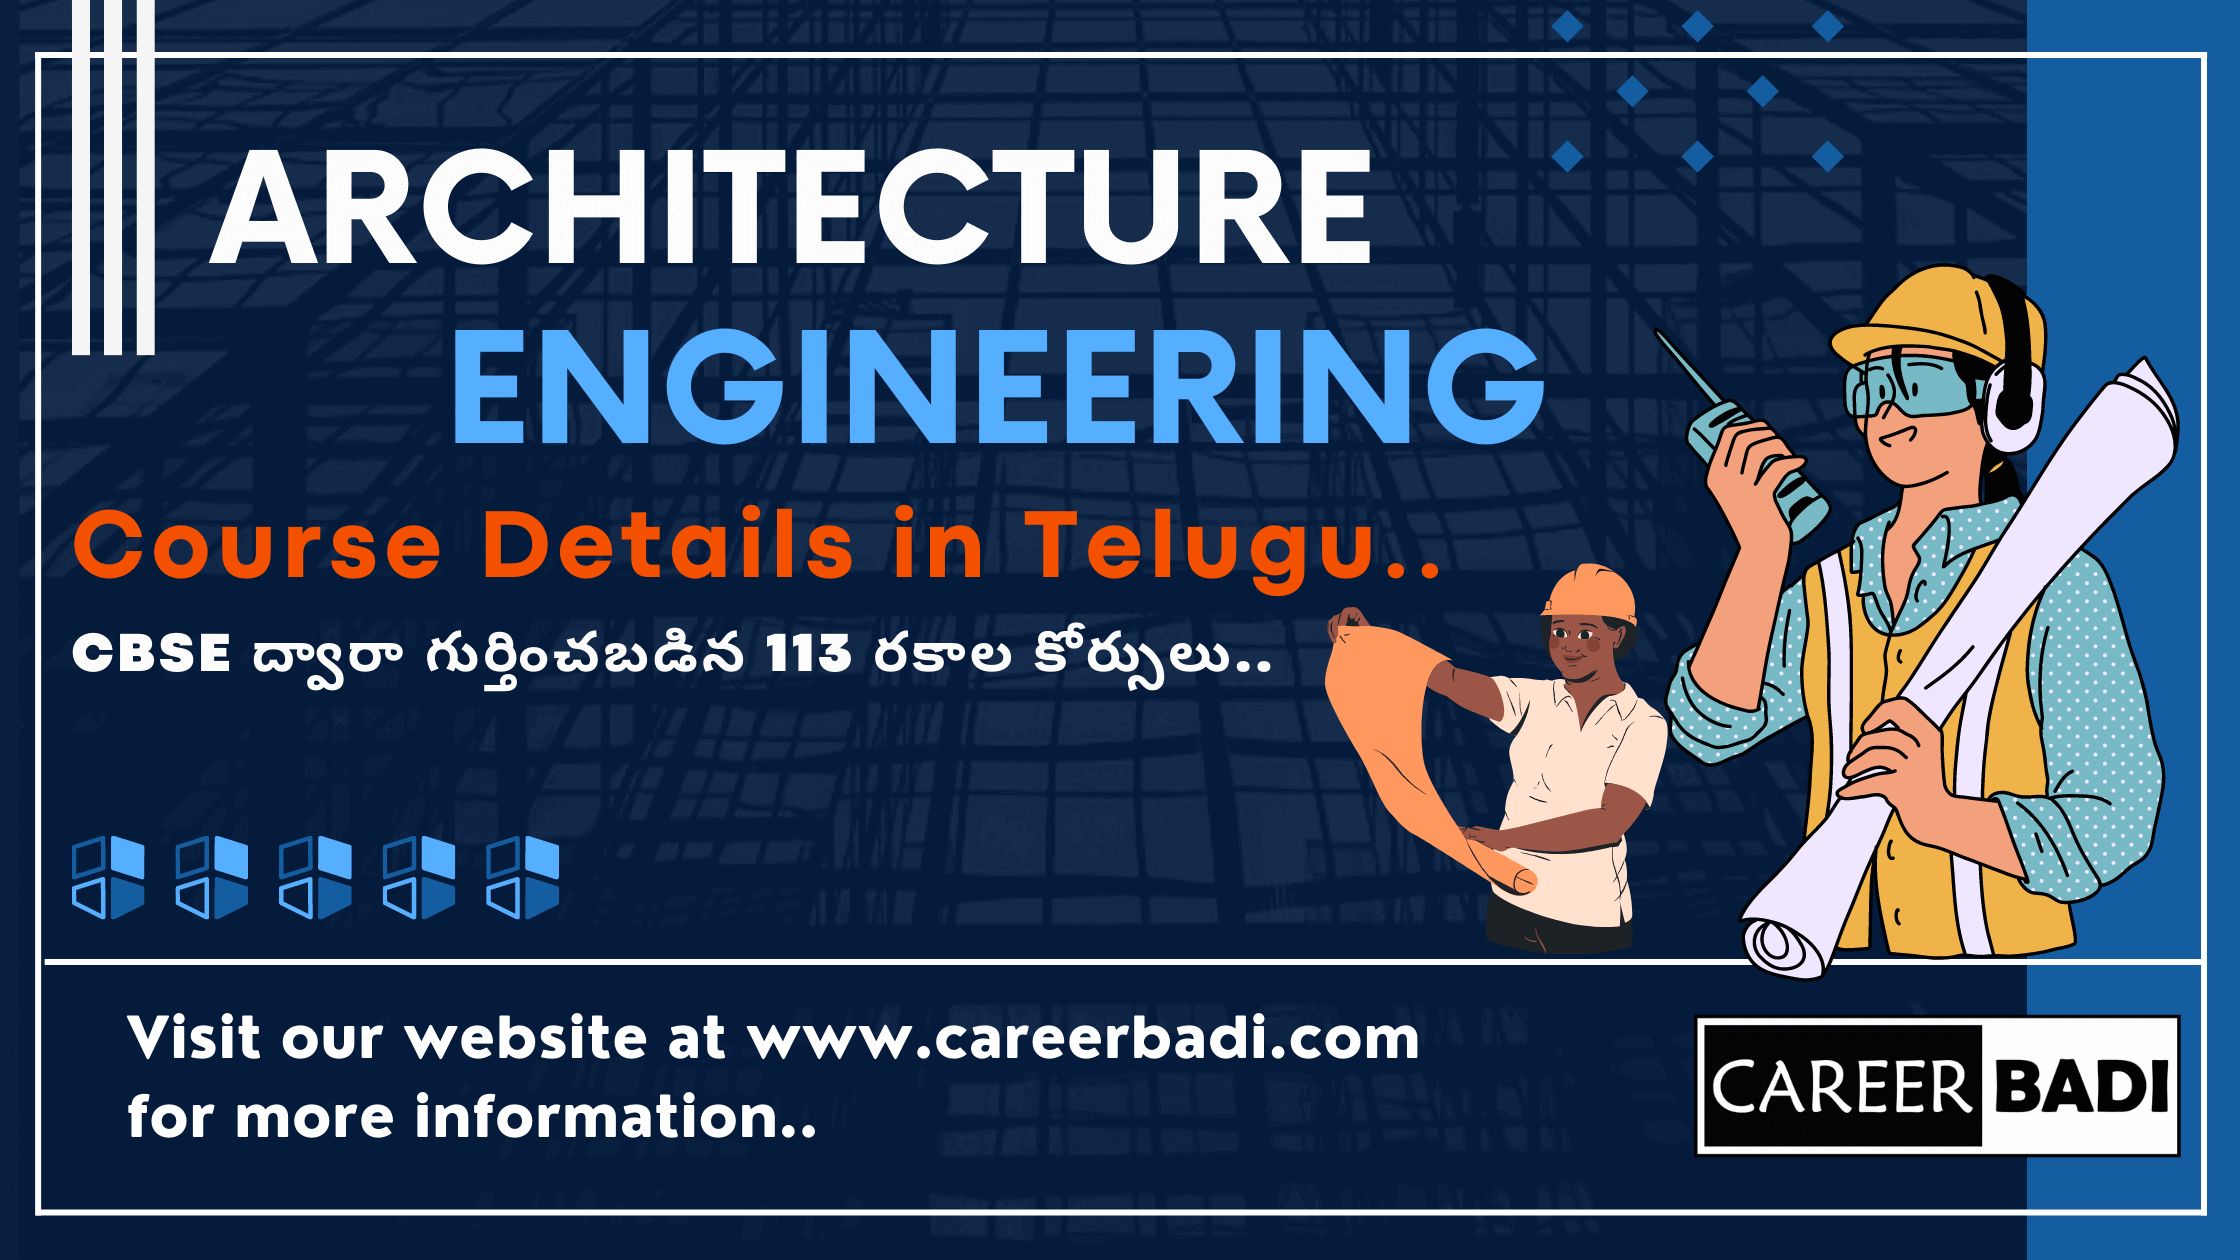 Architecture Engineering Course Details in Telugu